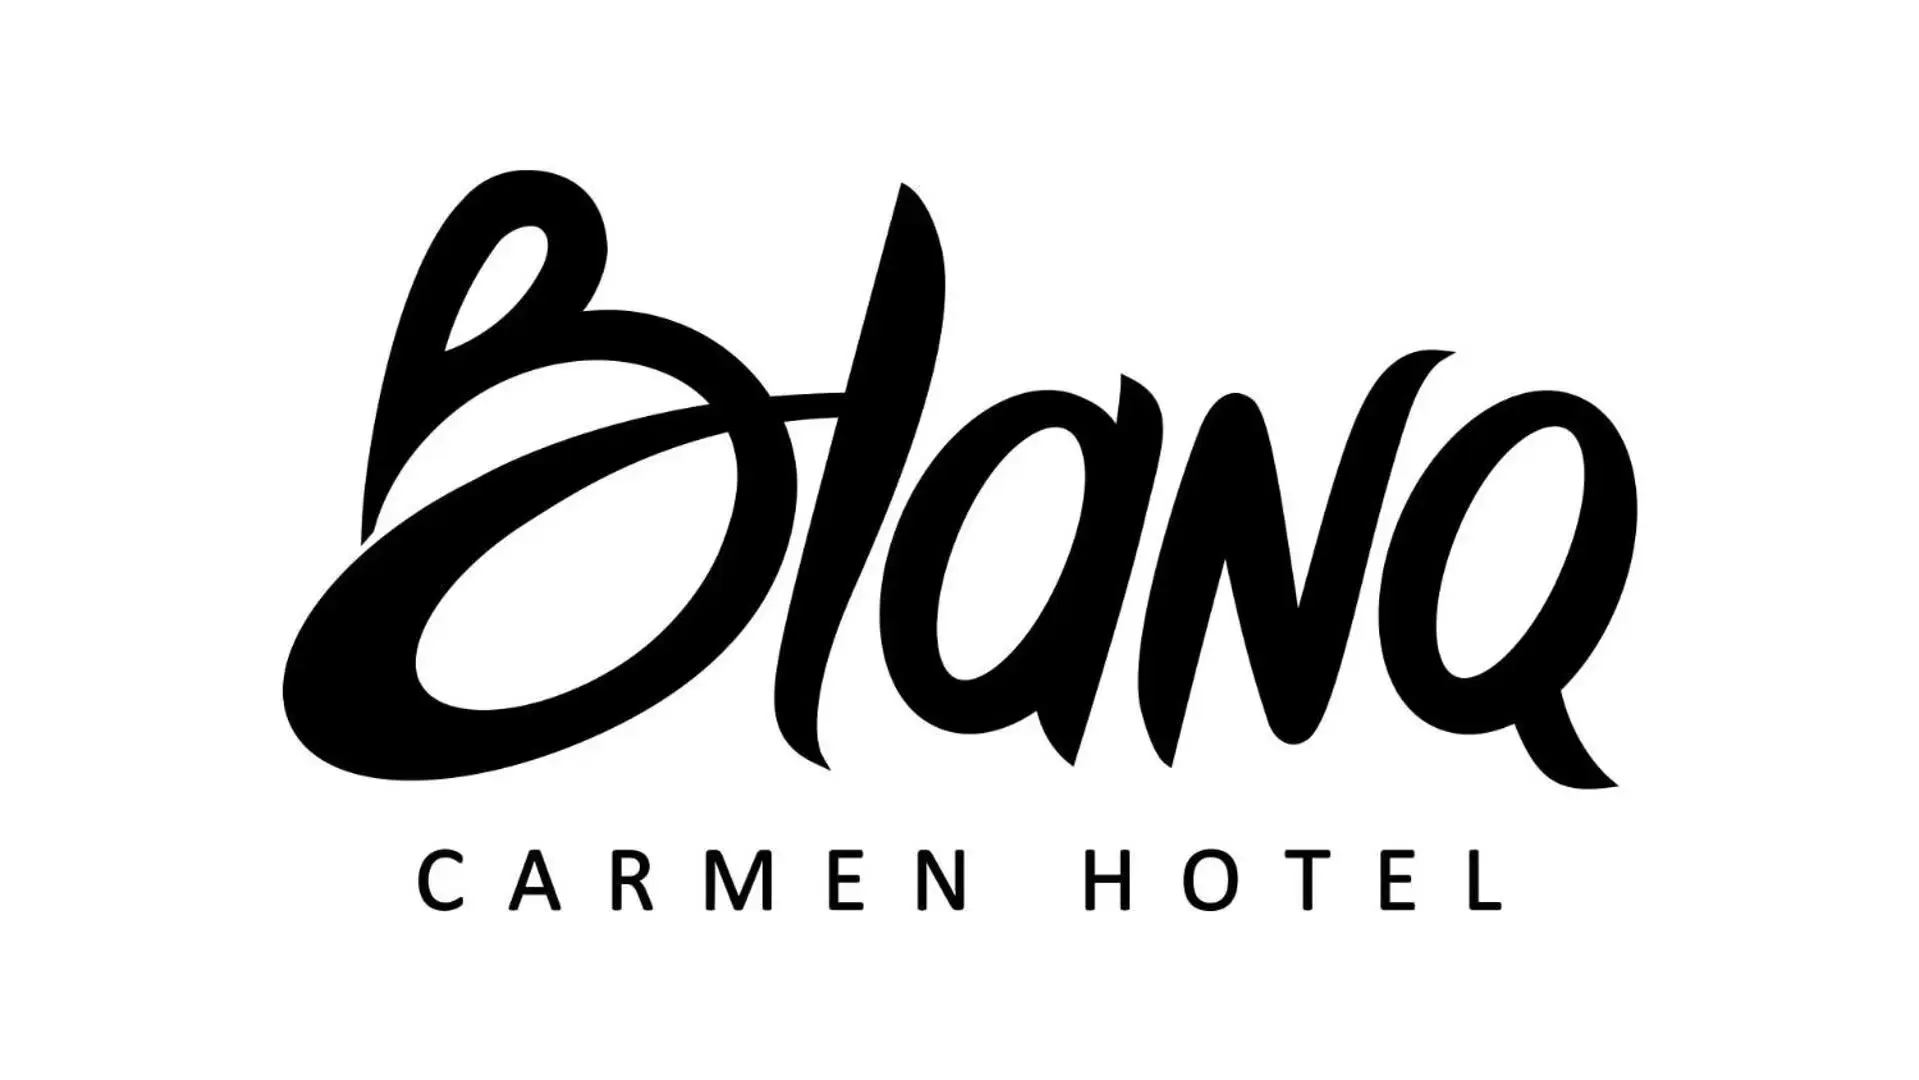 Property logo or sign in Blanq Carmen Hotel